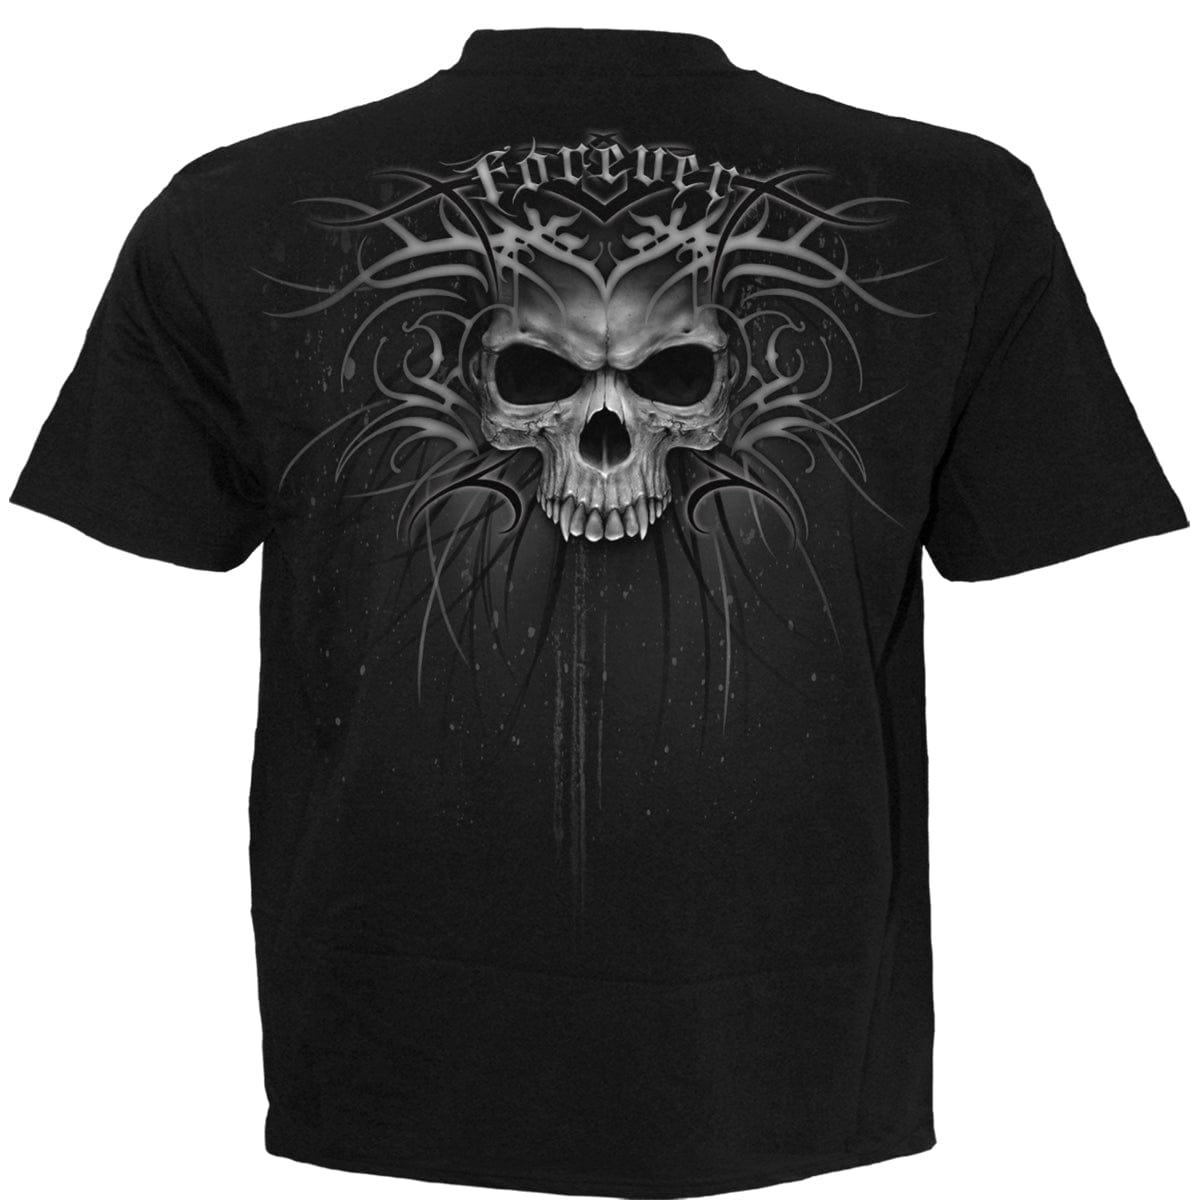 DEATH FOREVER - T-Shirt Black - Spiral USA